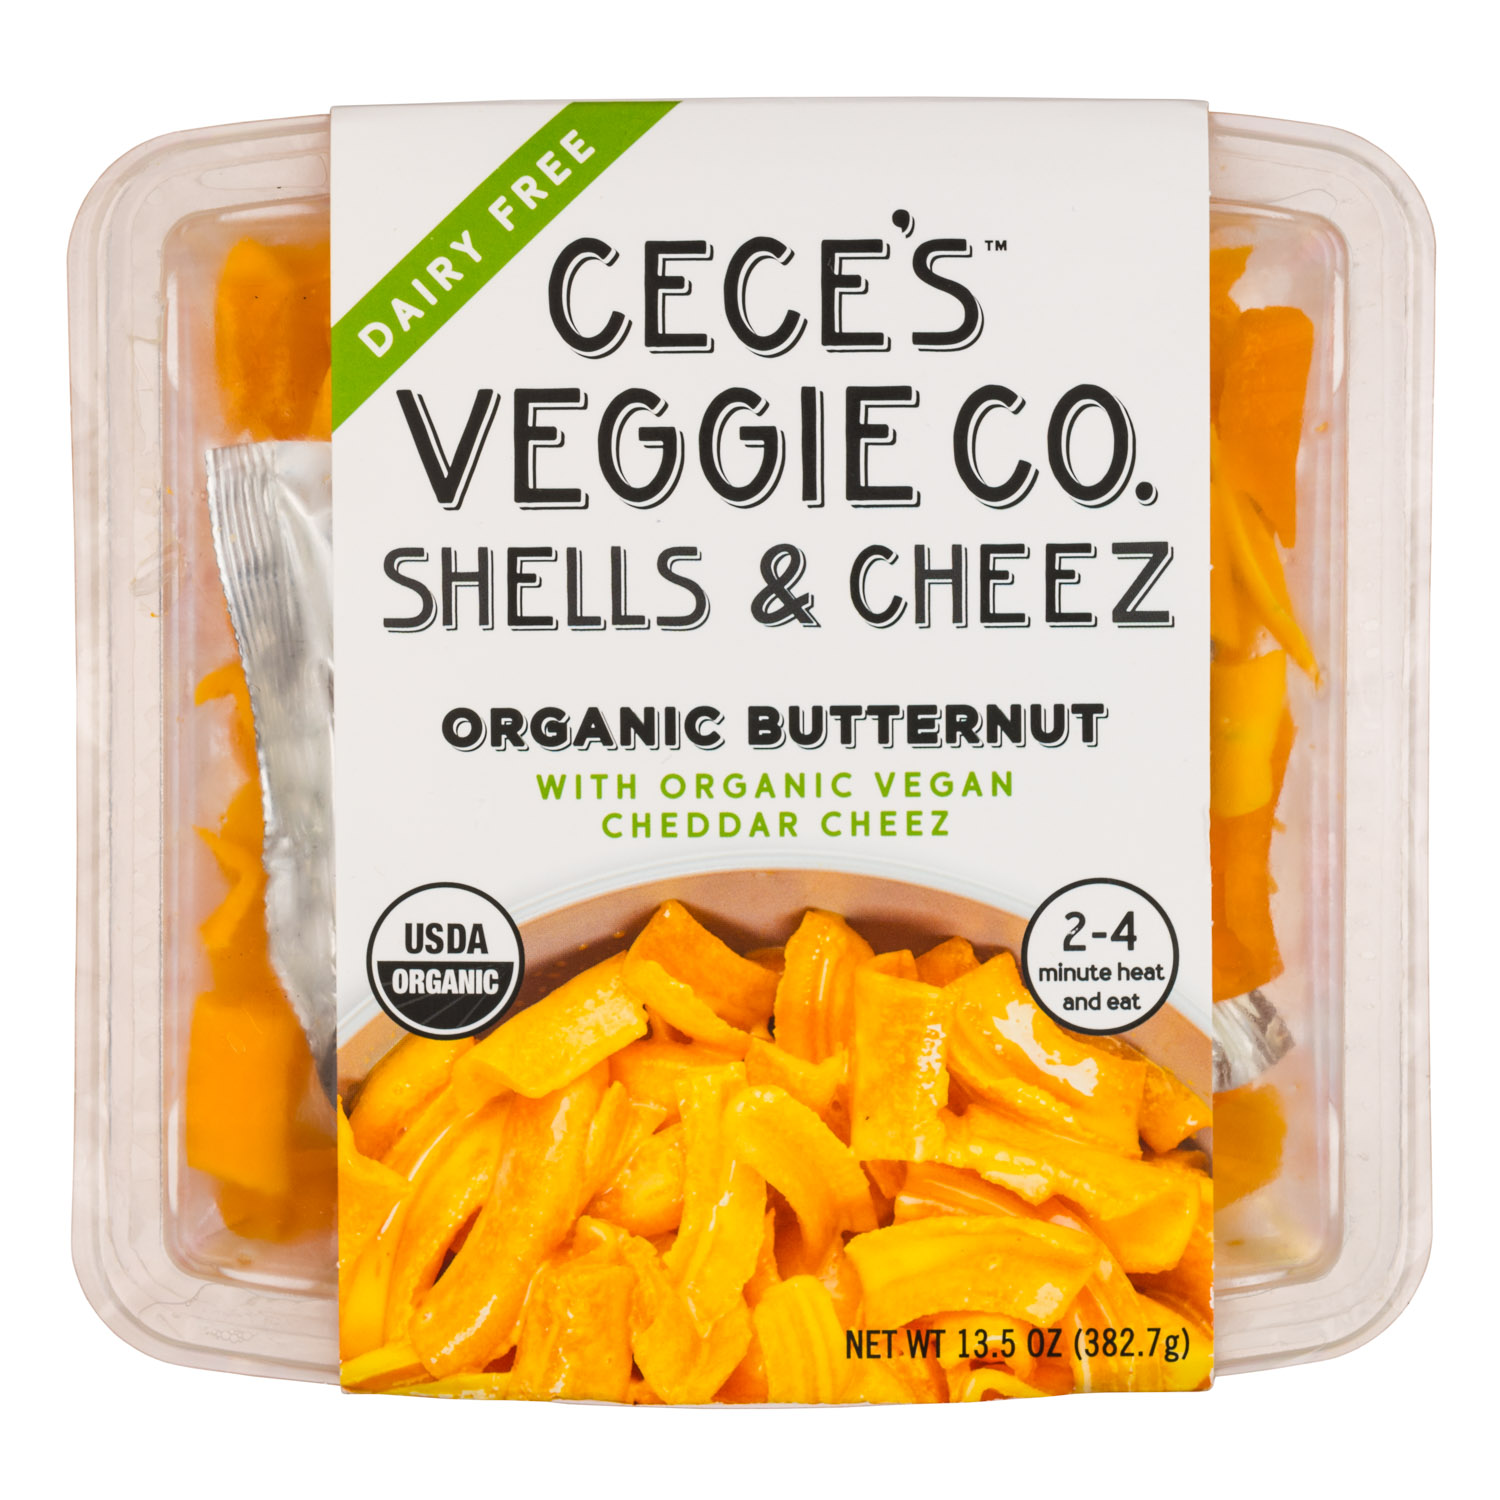 Organic Butternut with Organic Vegan Cheddar Cheez